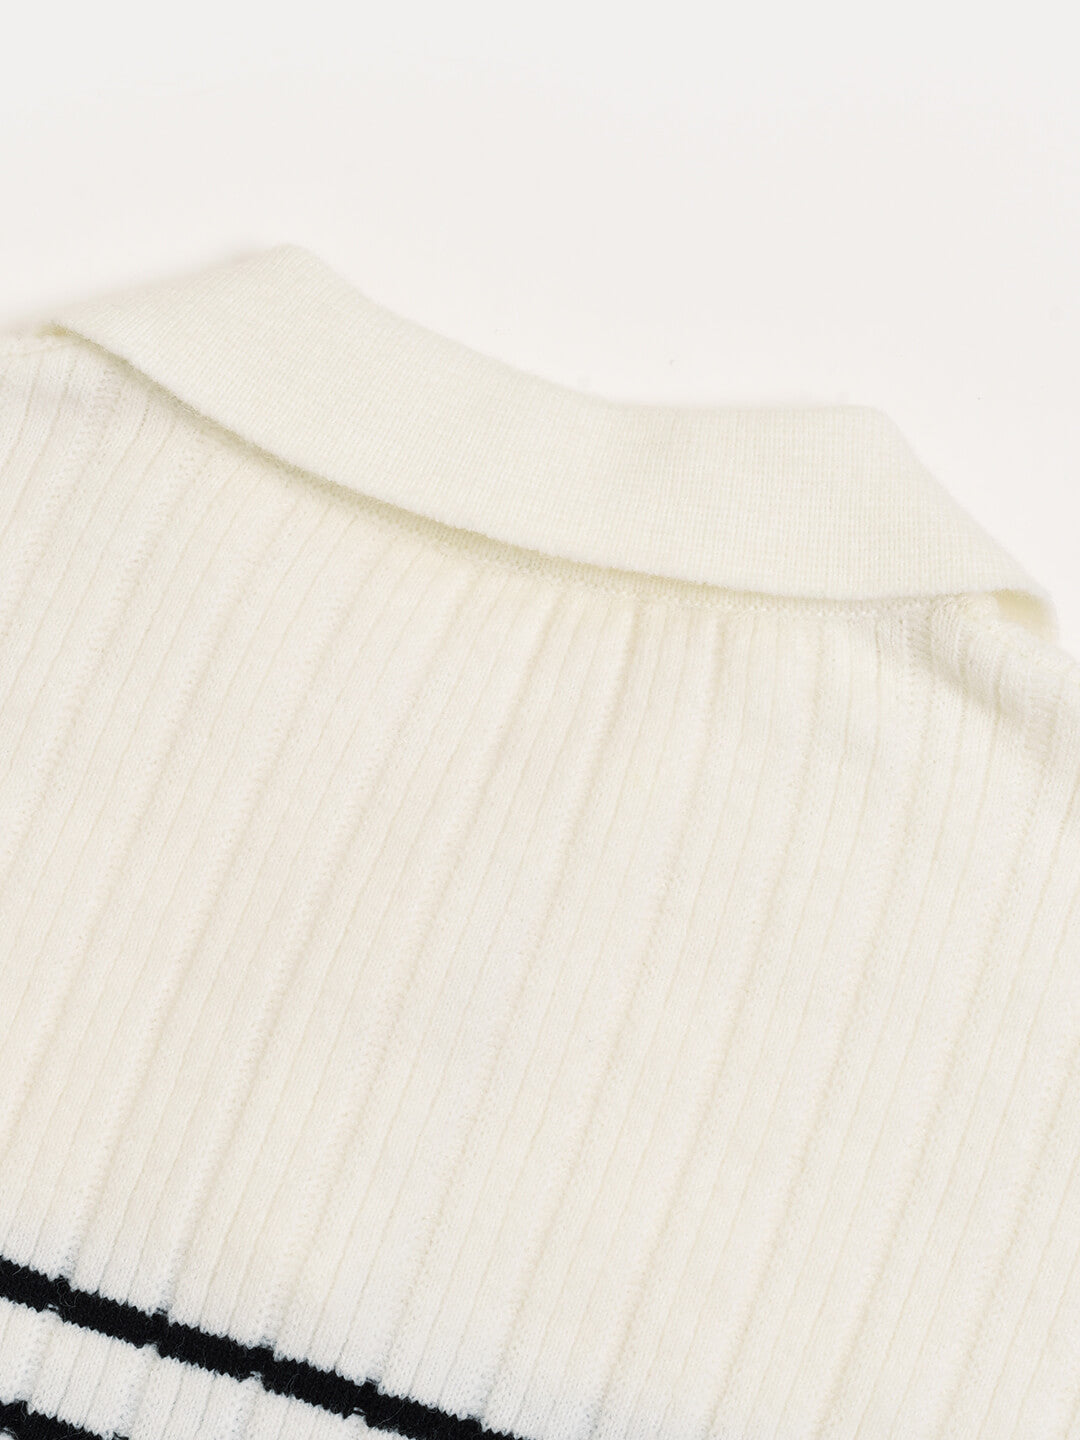 Davian Striped White Polo Knit Top/simple retro